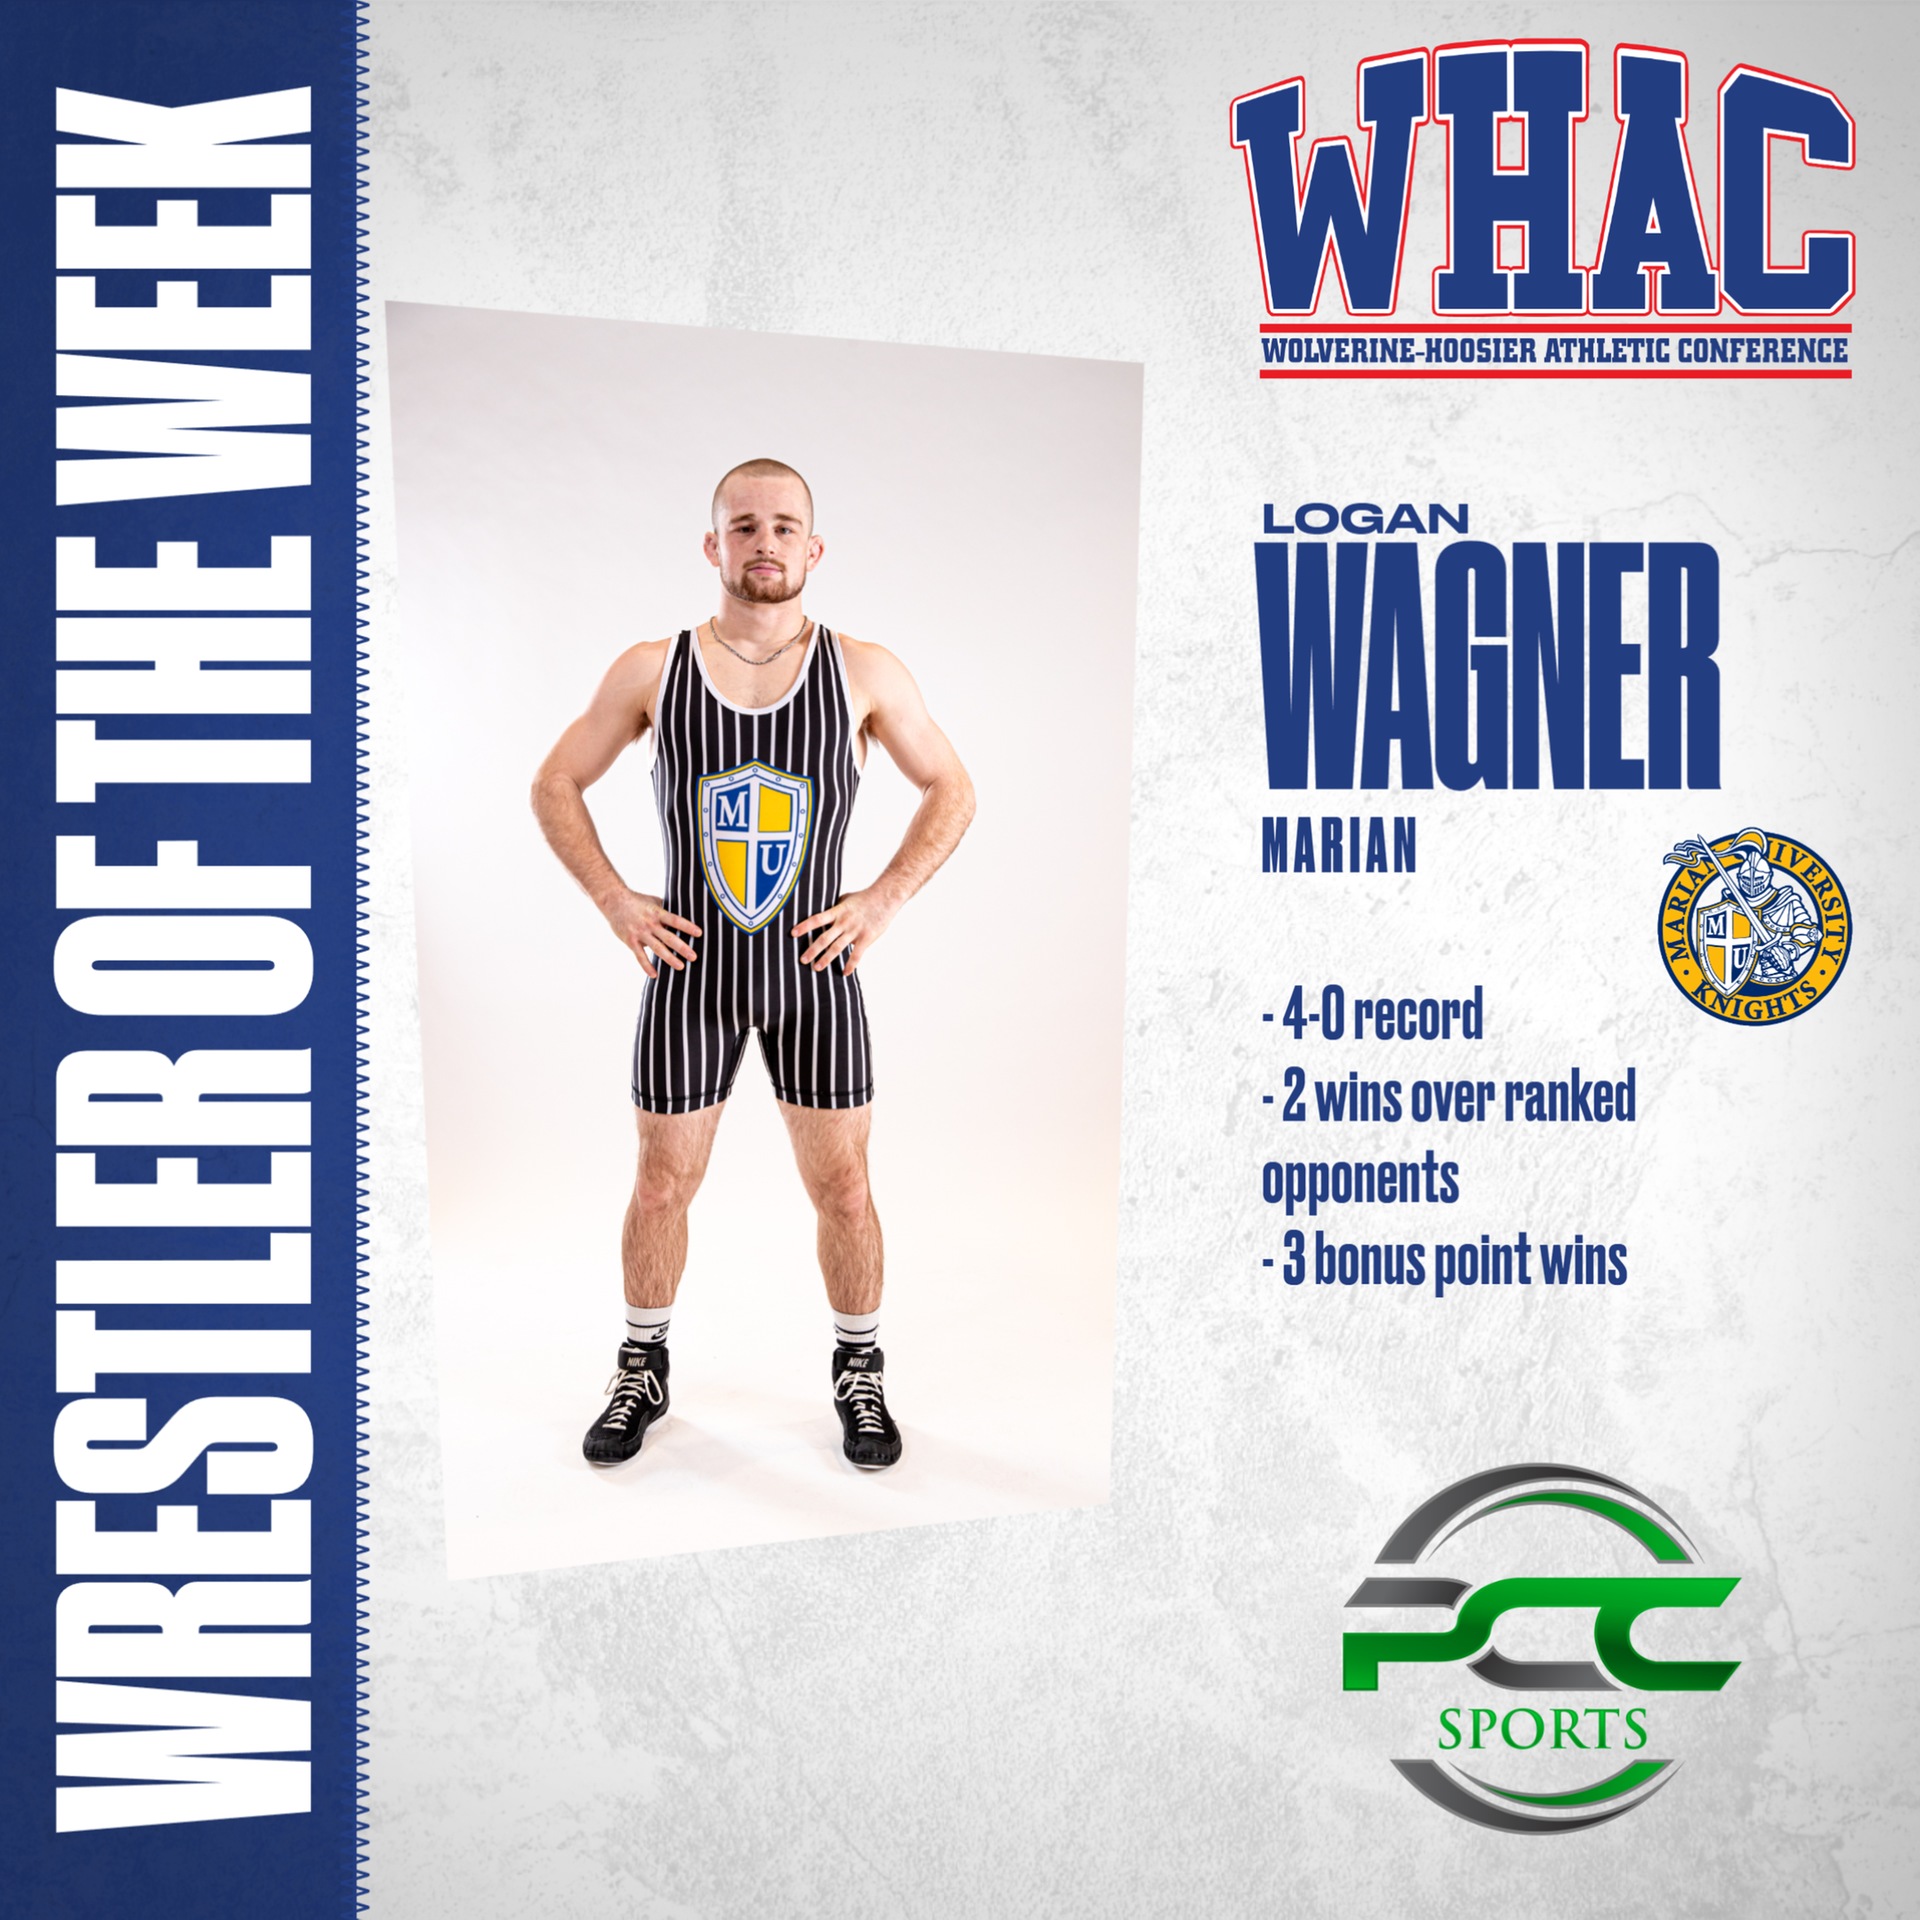 Marian's Wagner Named Wrestler of the Week.